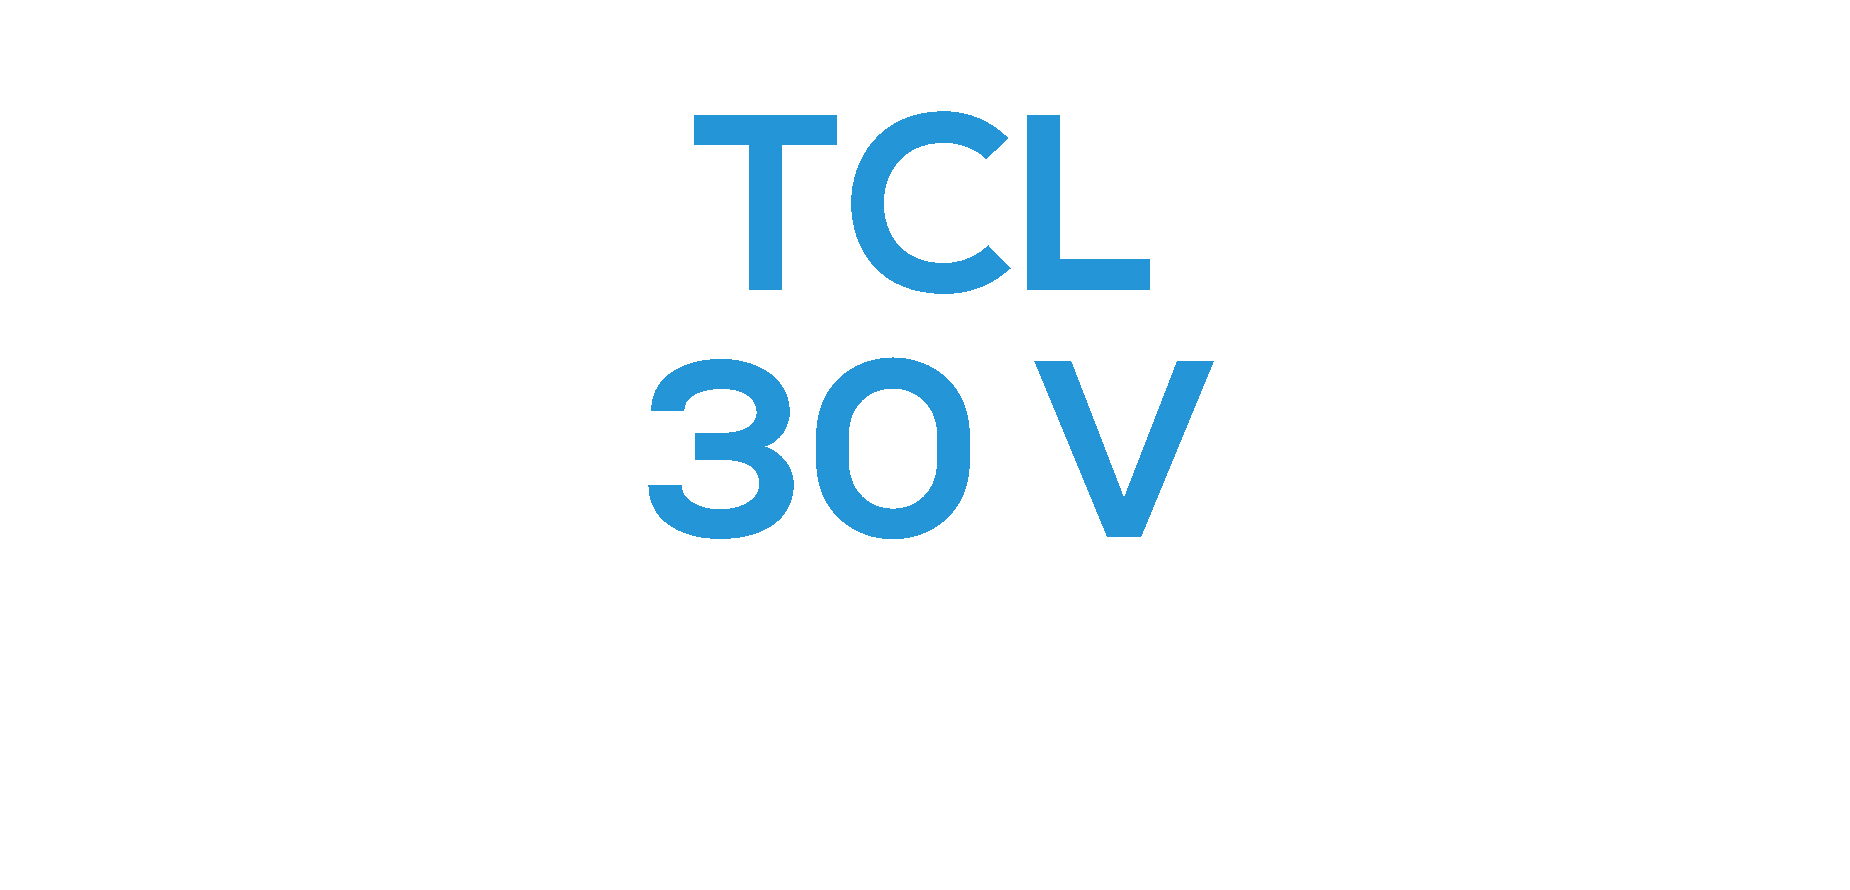 TCL 30 V